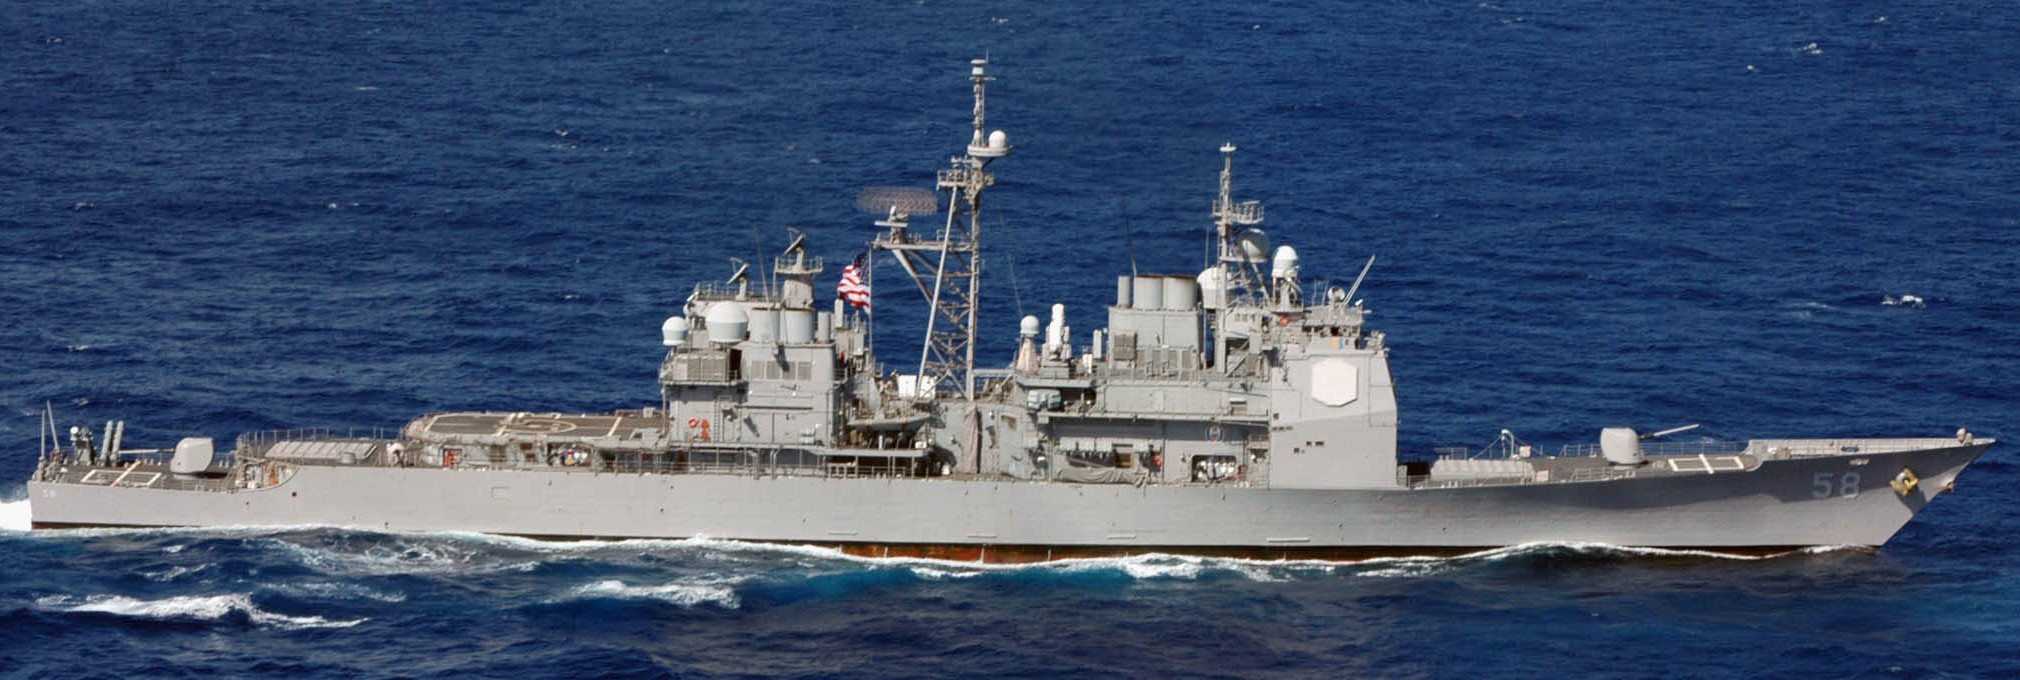 cg-58 uss philippine sea ticonderoga class guided missile cruiser aegis us navy 22